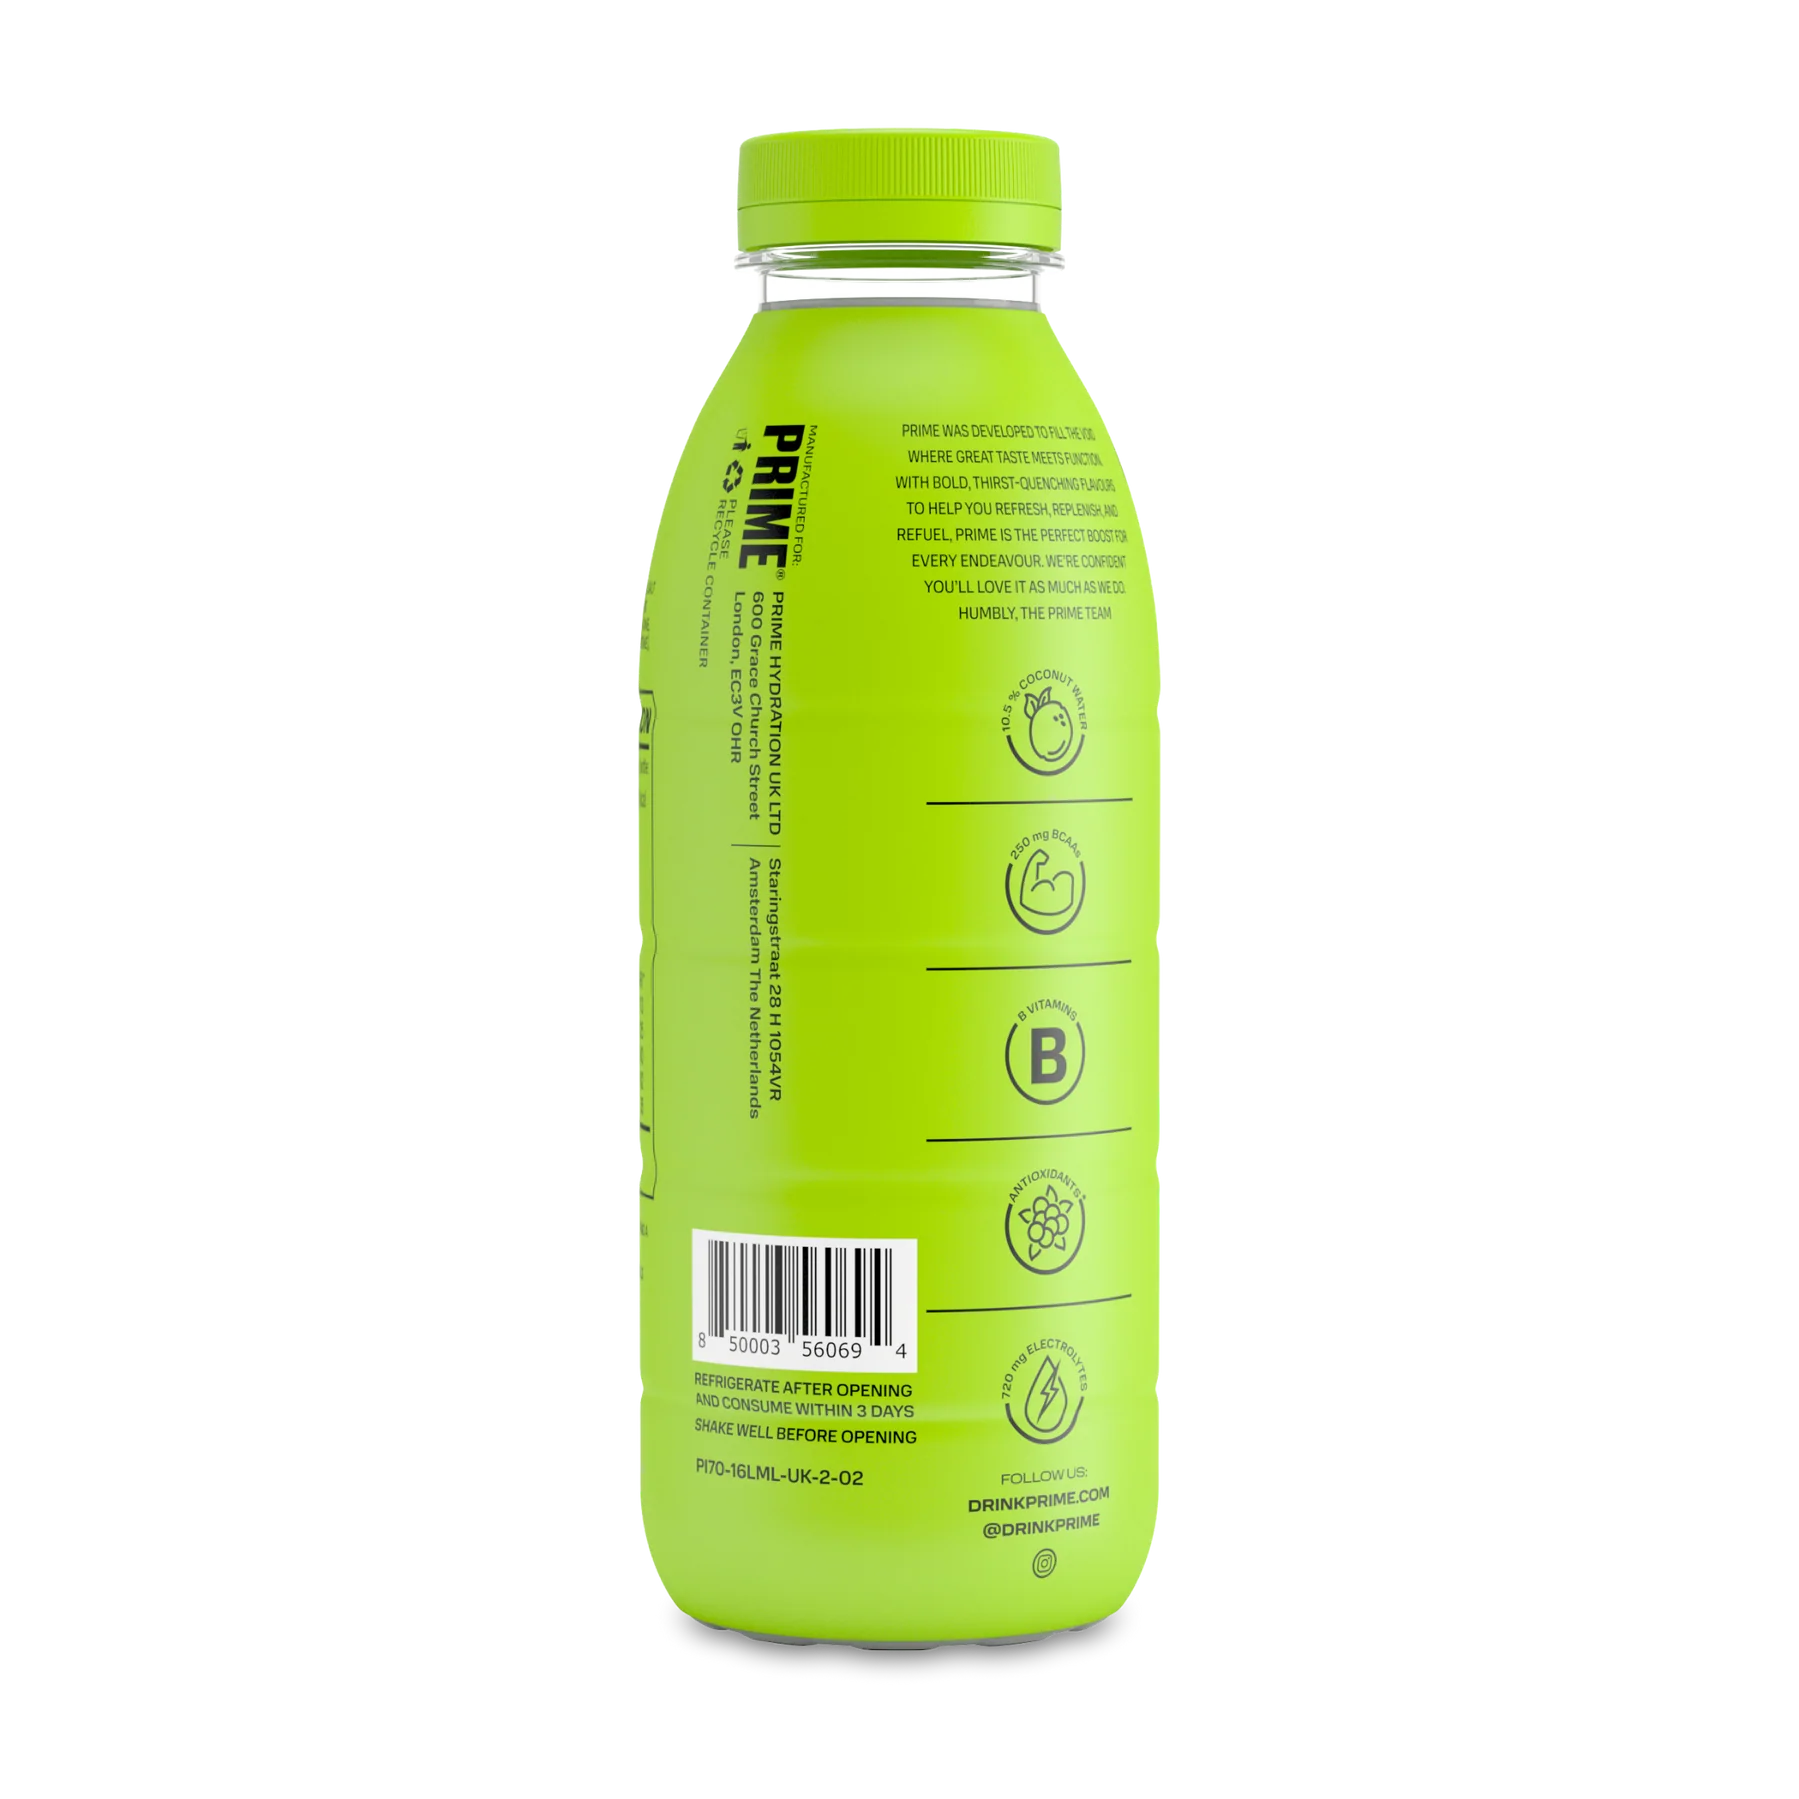 Prime Lemon Lime Hydration Drink 500ml